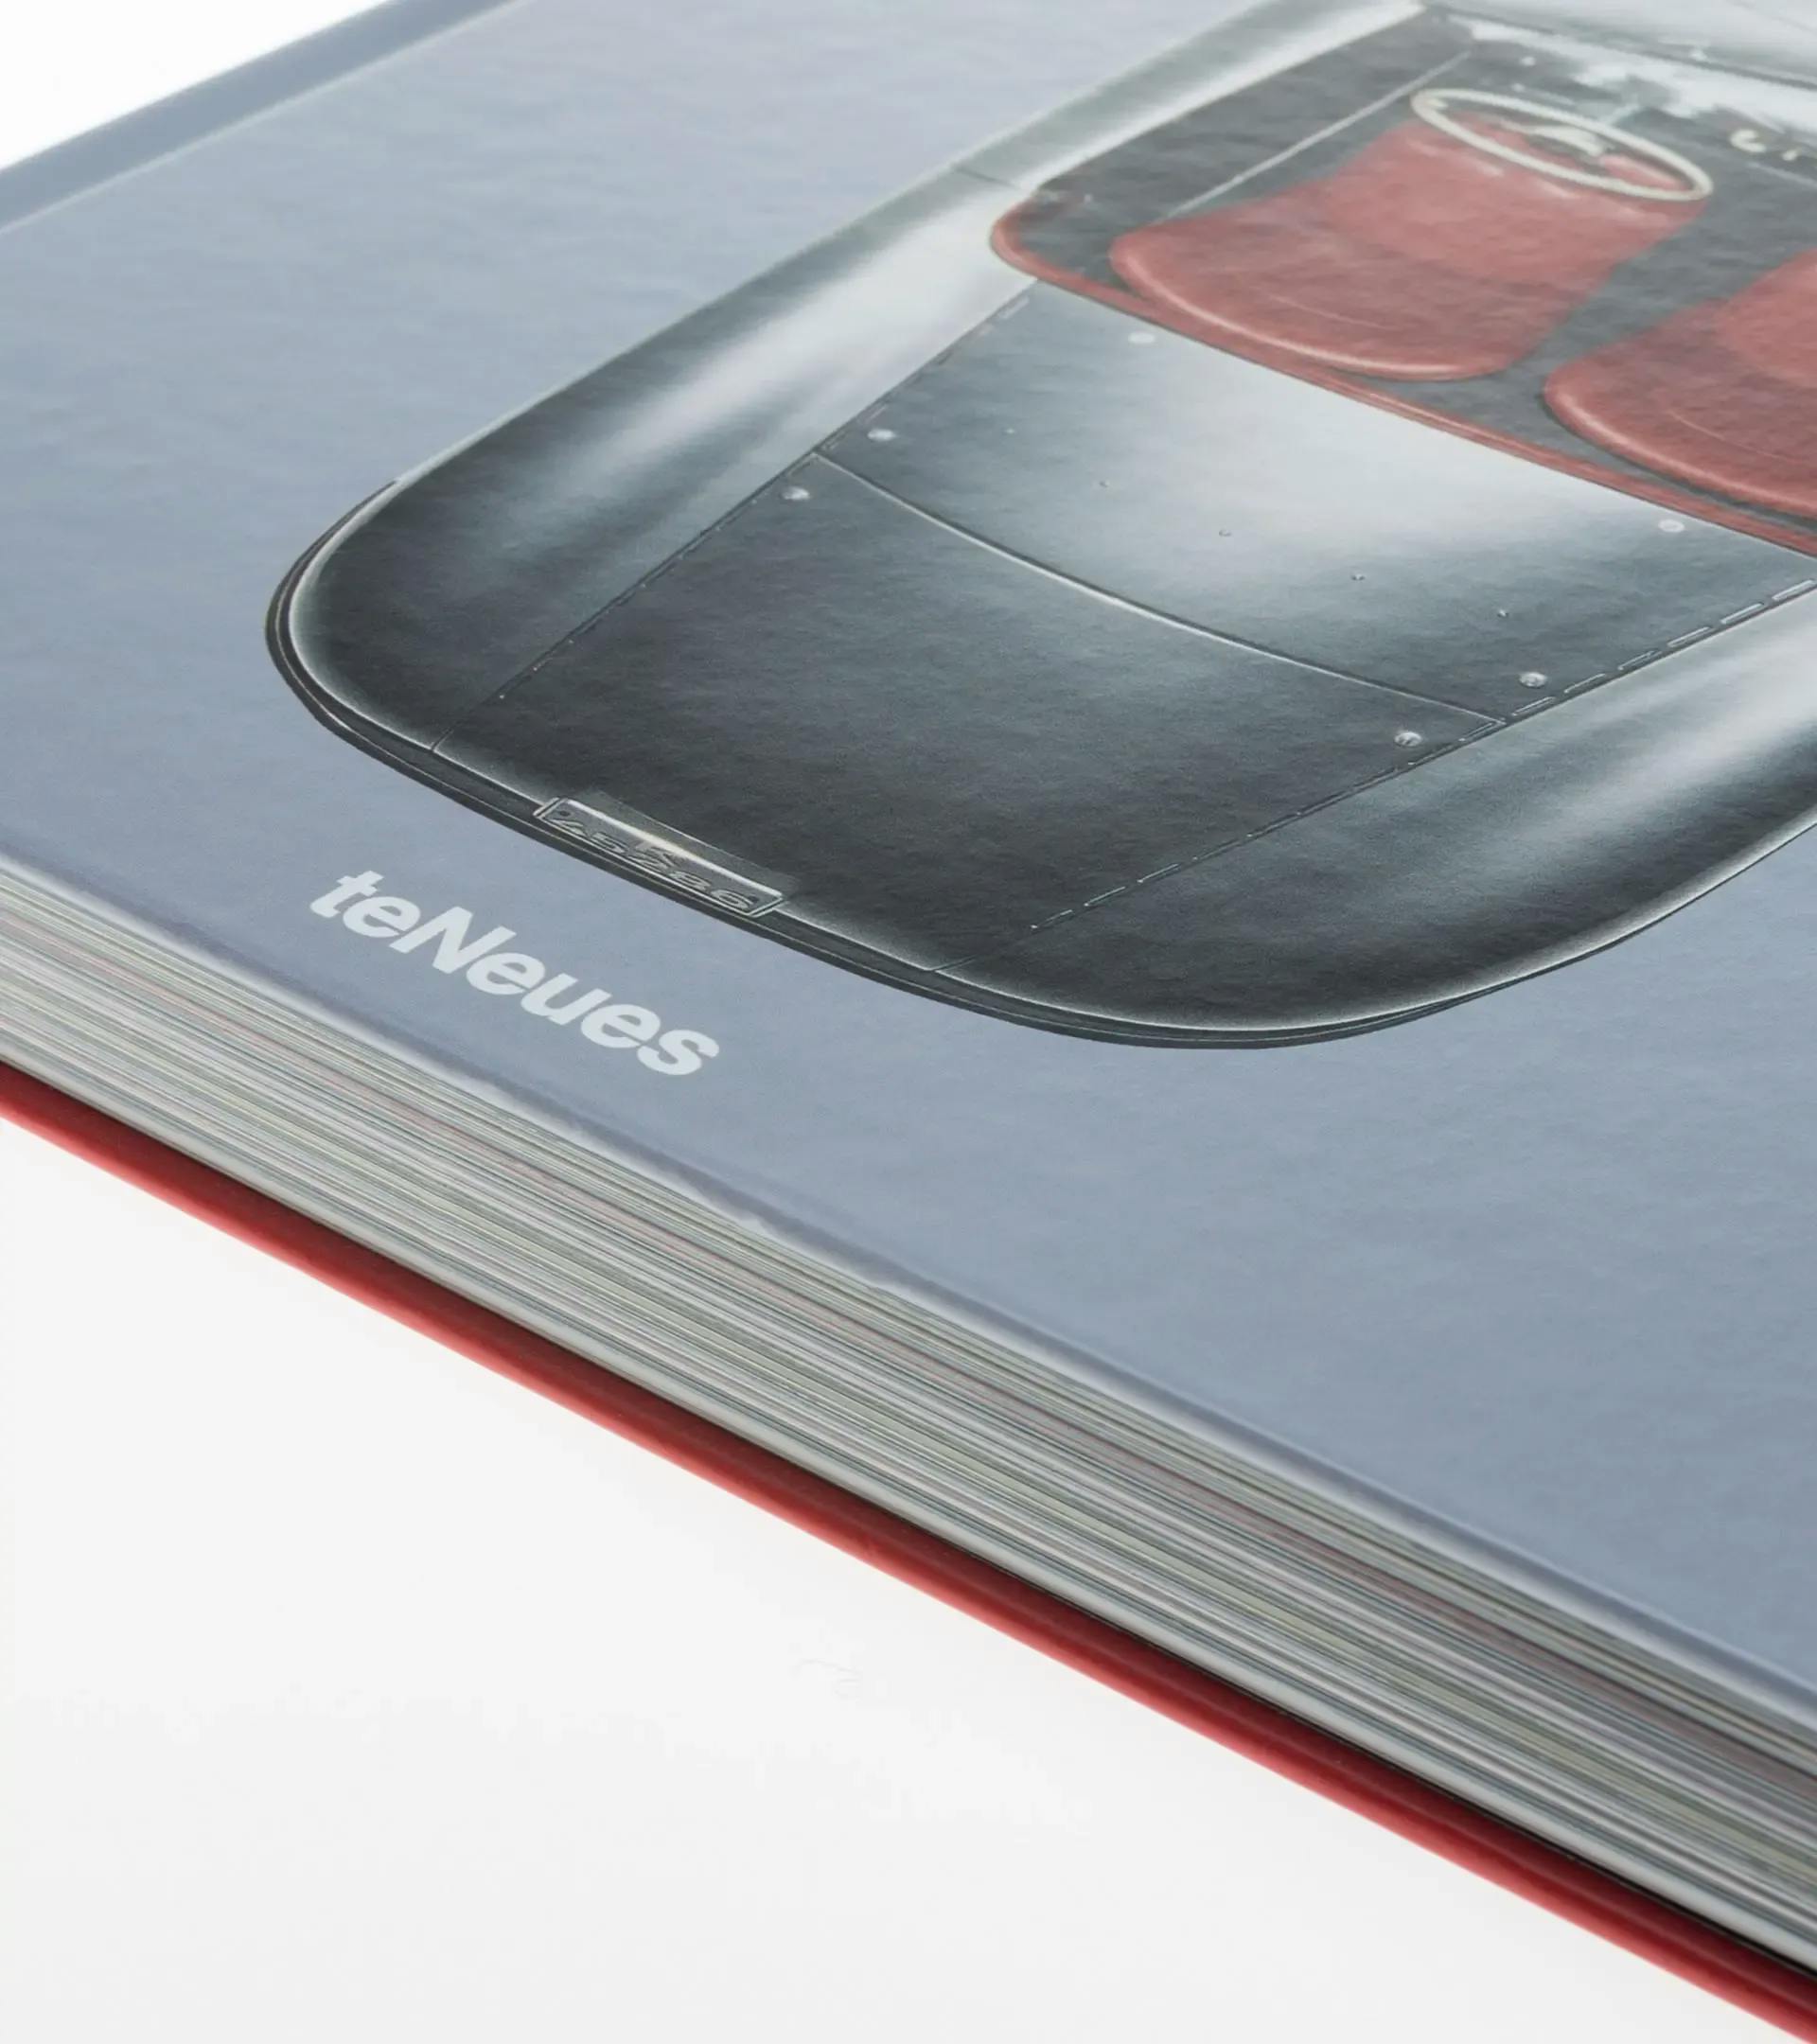 The Porsche Book - Las mejores imágenes de Porsche por Frank M. Orel 3